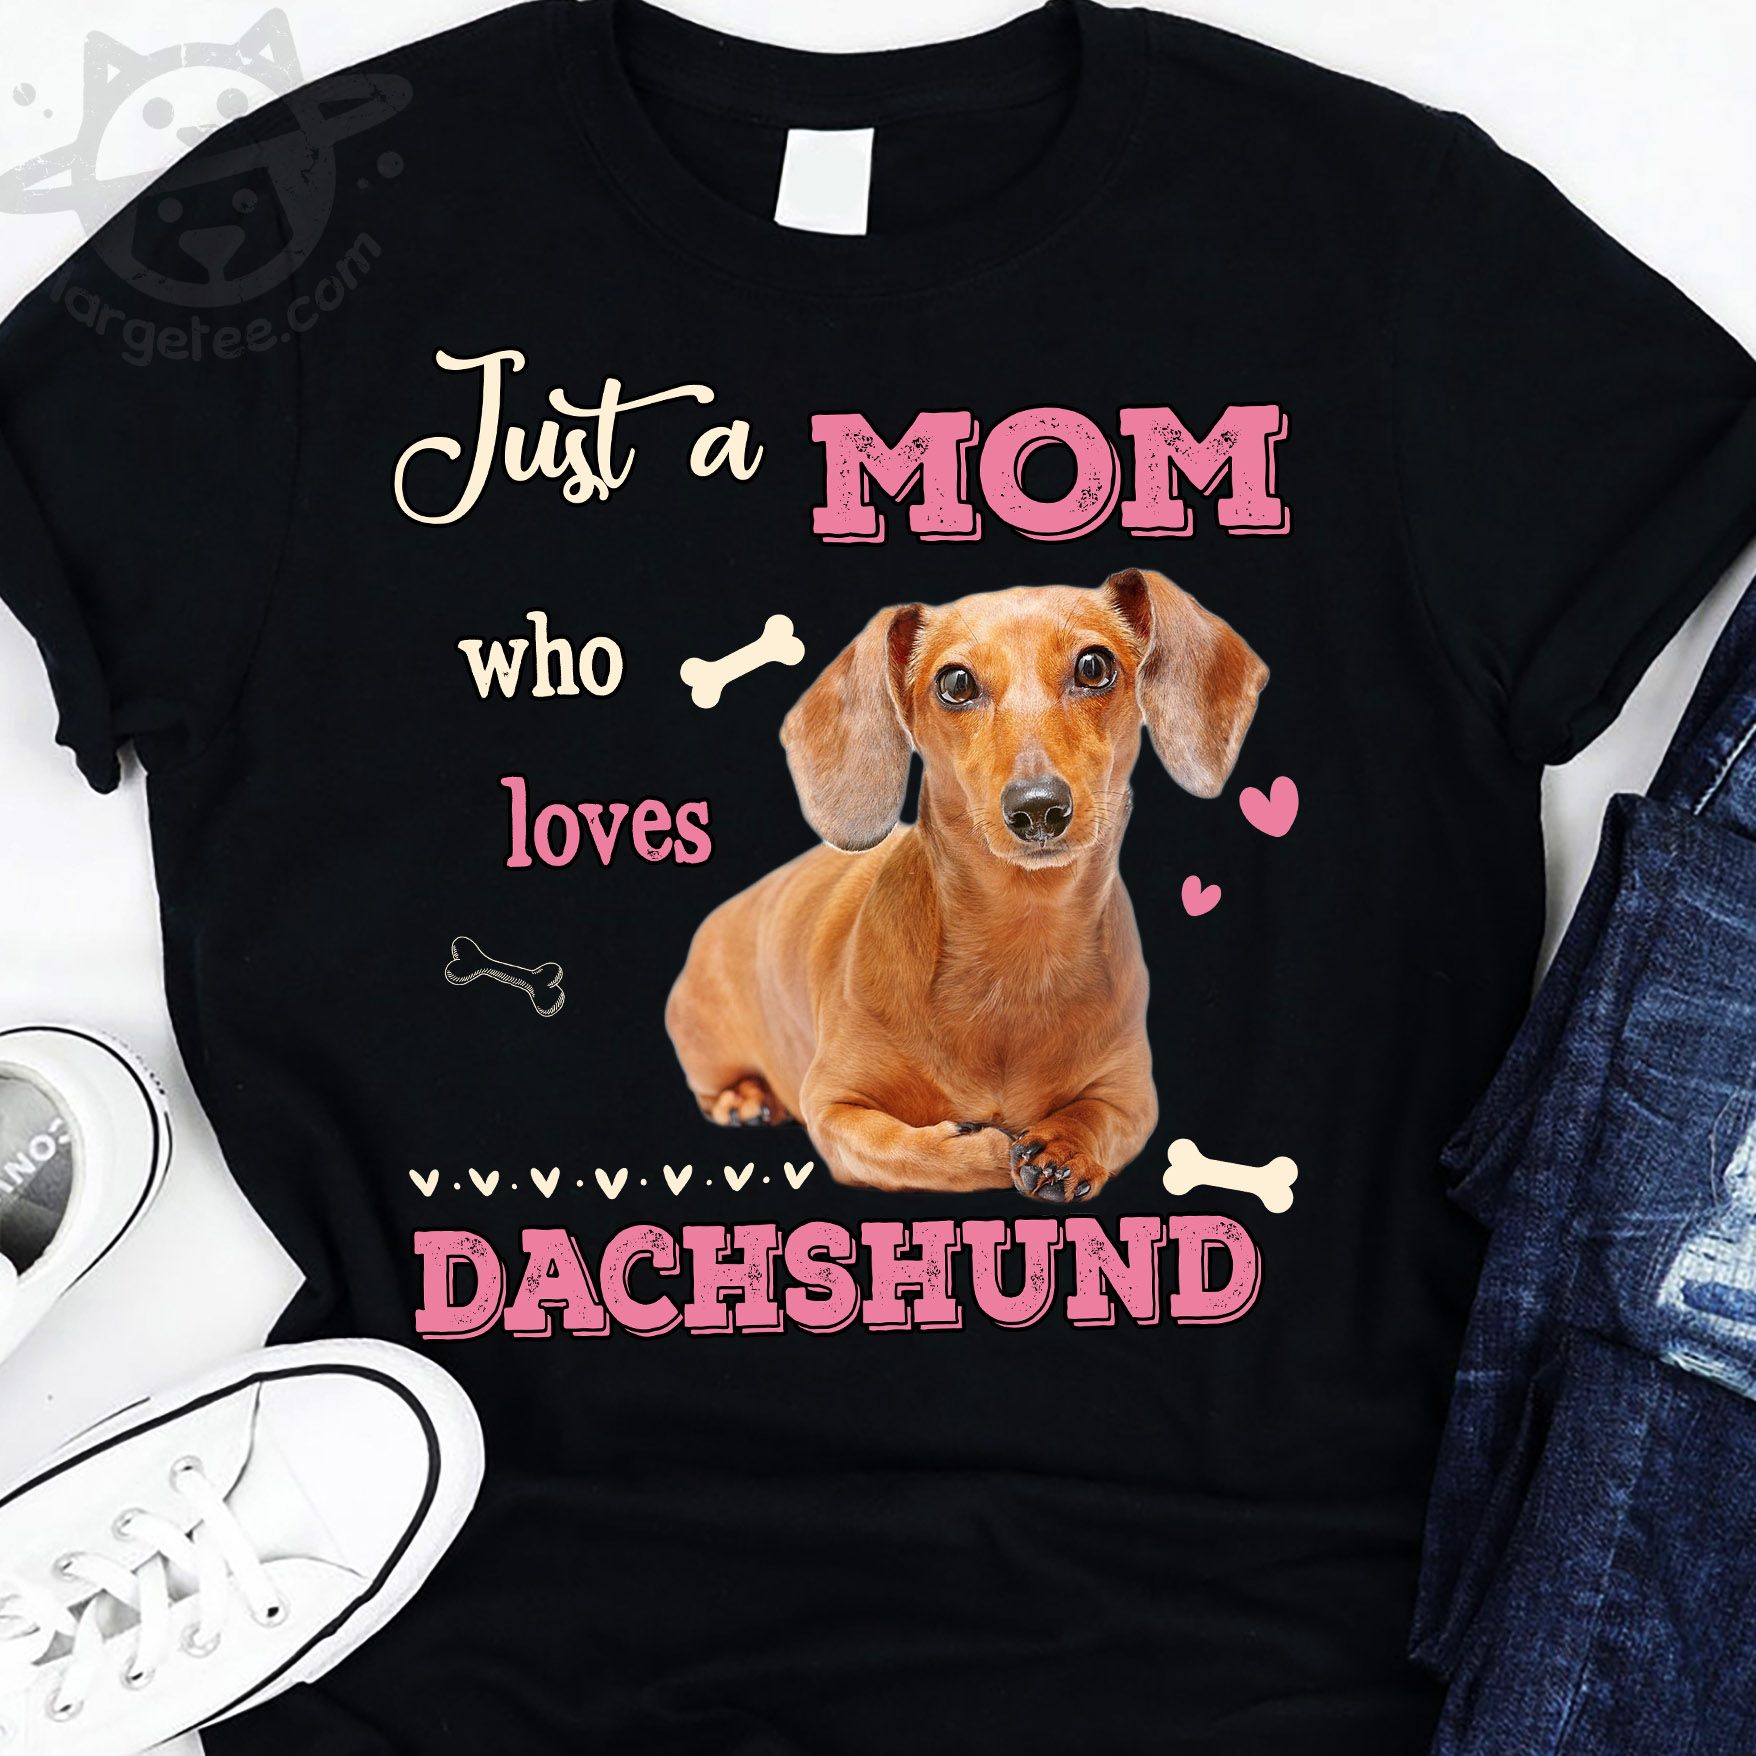 Just a mom who loves Dachshund - Dachshund dog